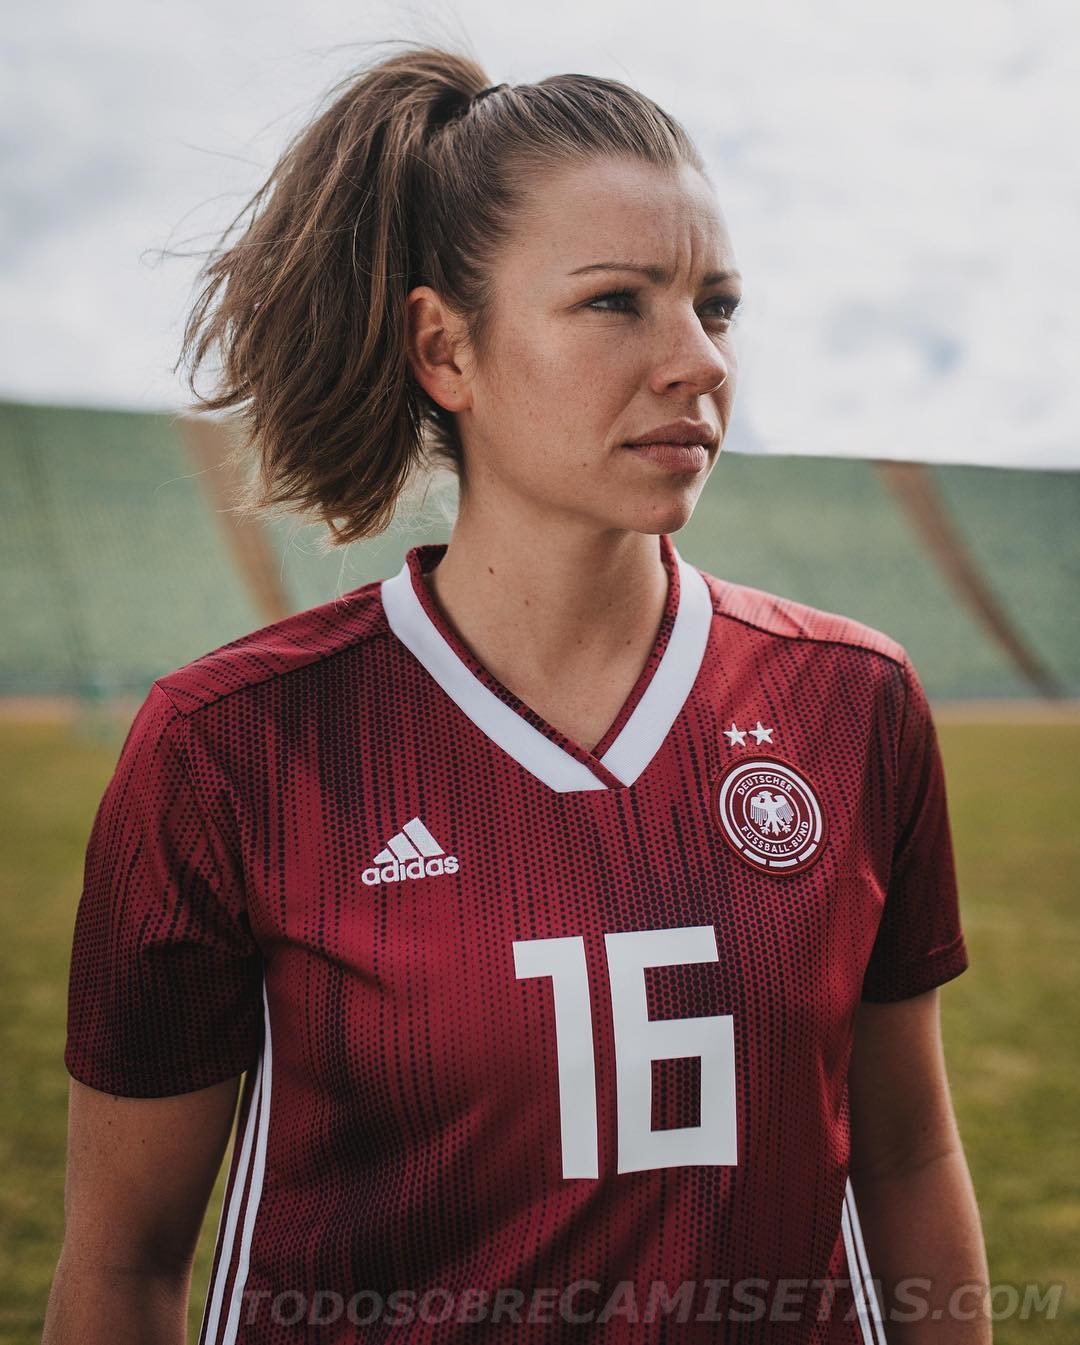 Camisetas del Mundial Femenino Francia 2019 - Germany 2019 Women's World Cup adidas kits